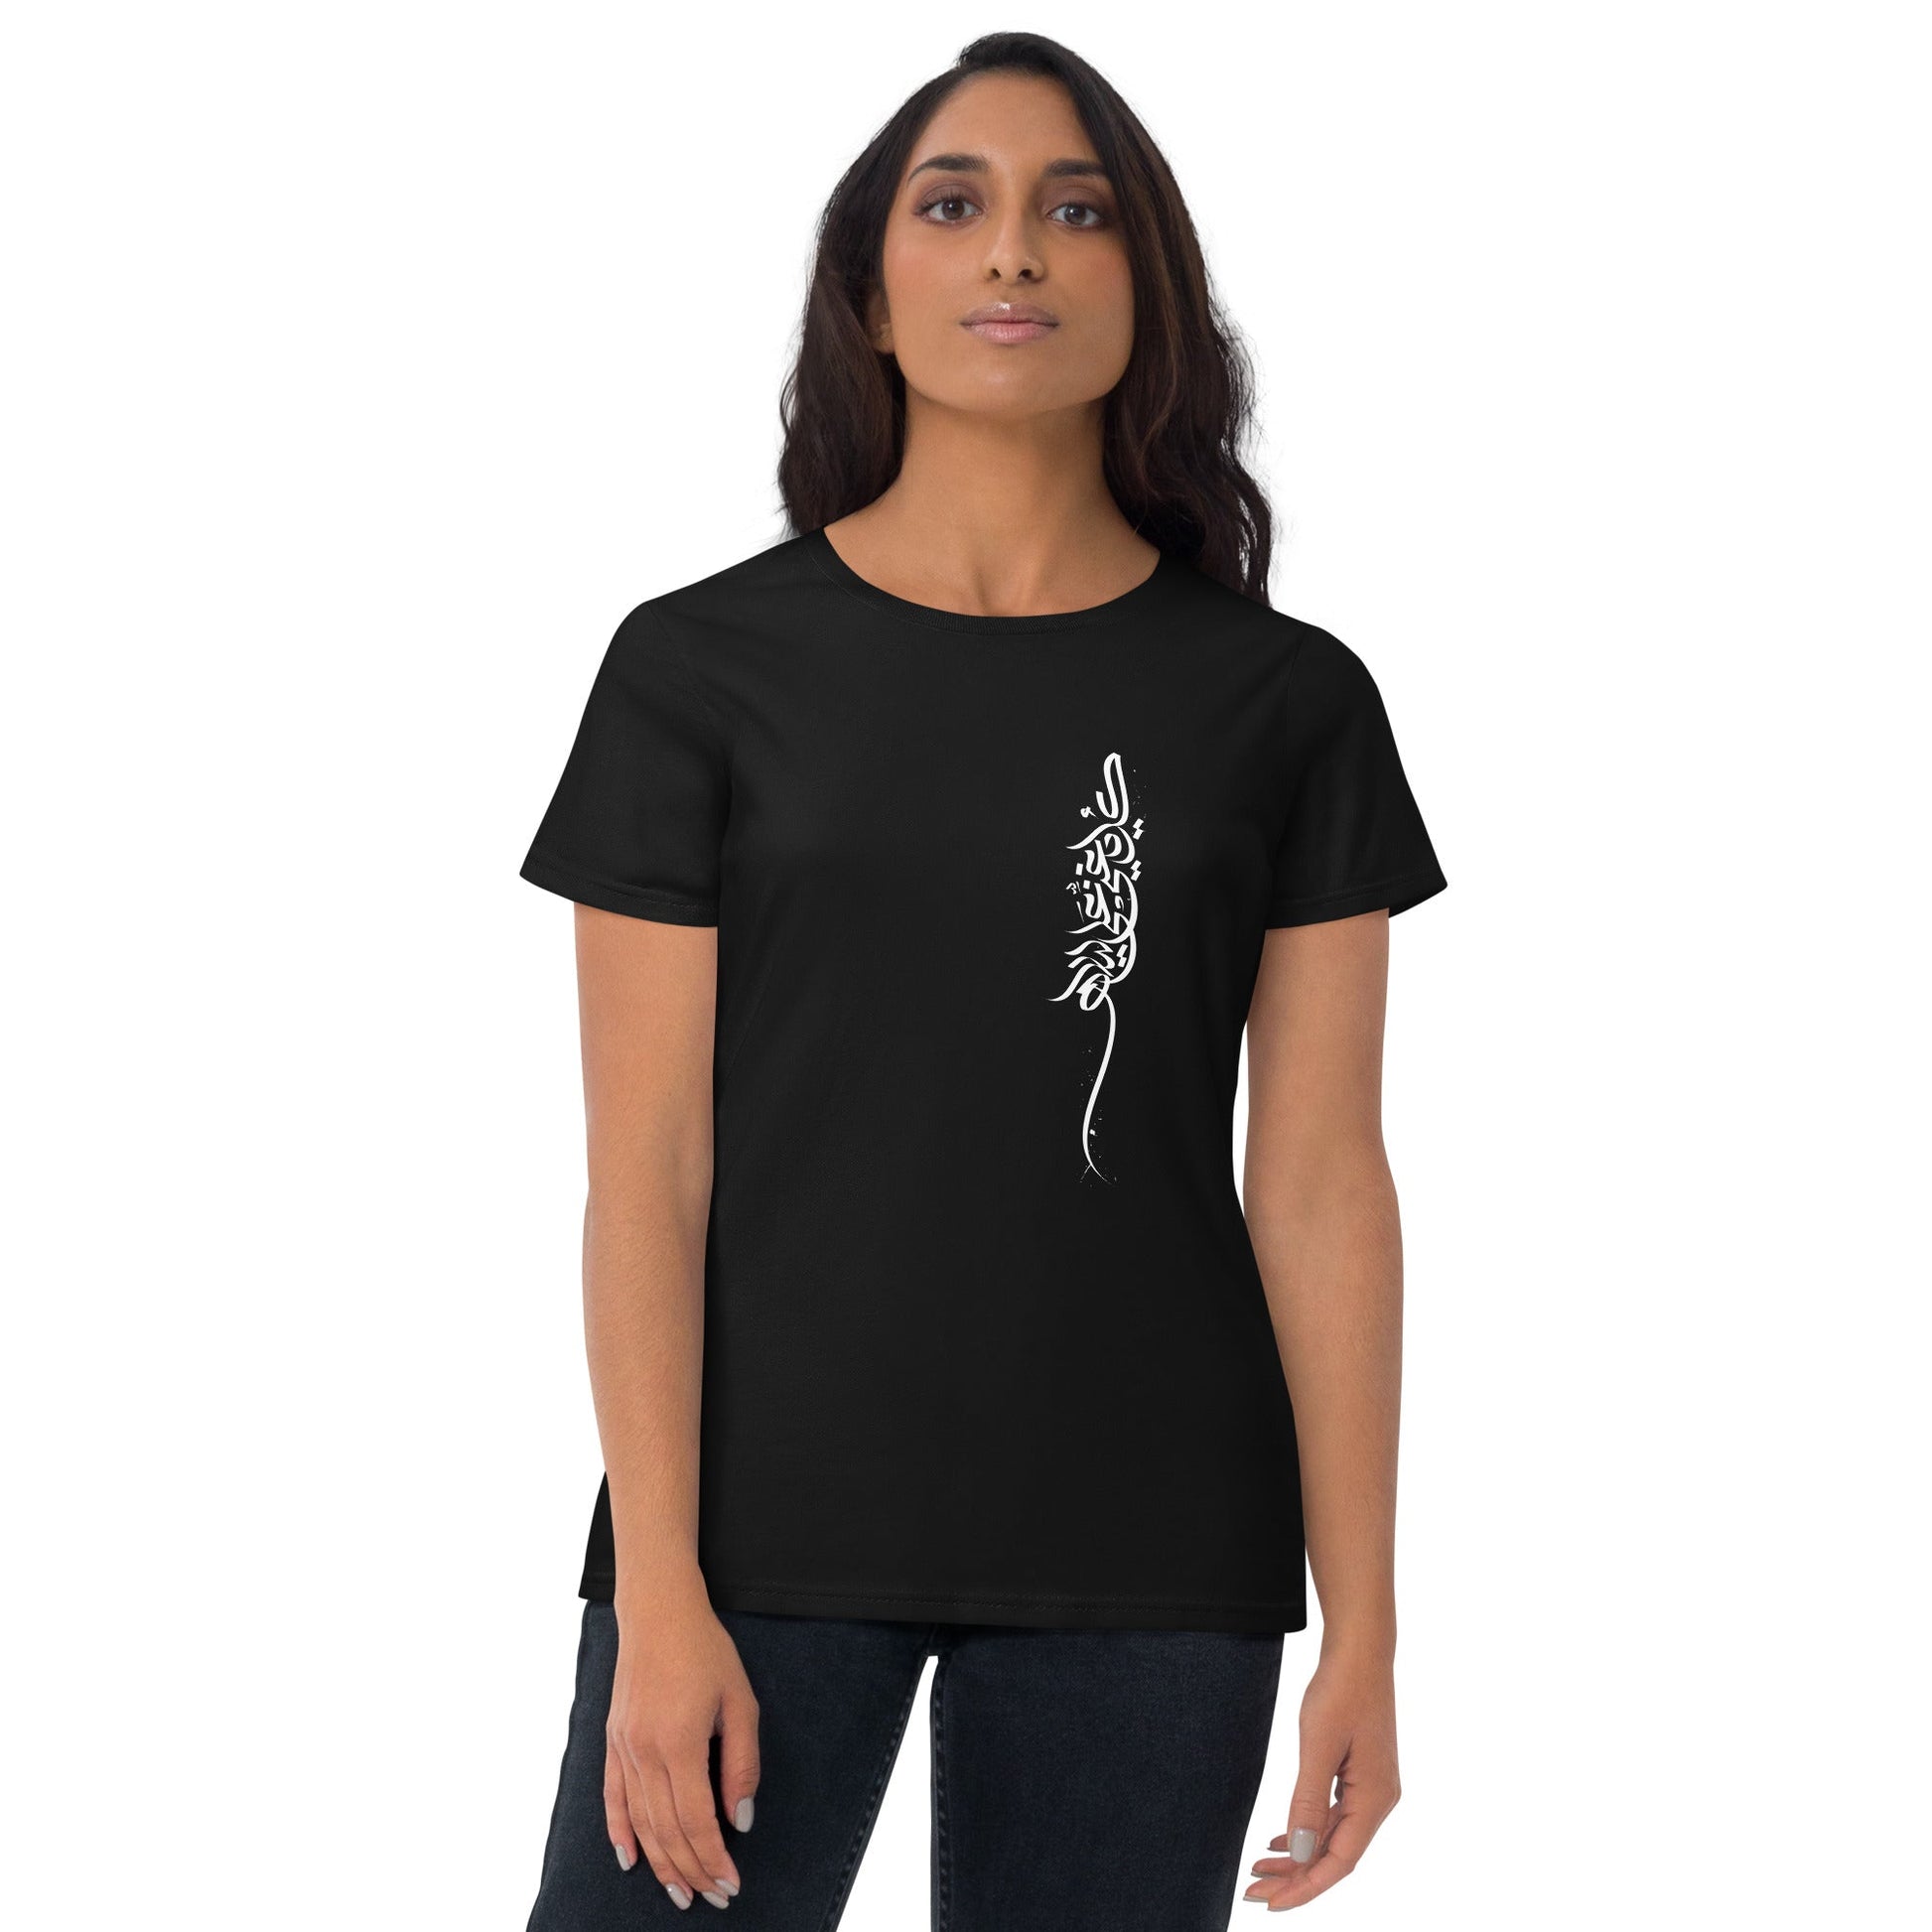 YAGHNI Women's T-Shirt - Bonotee